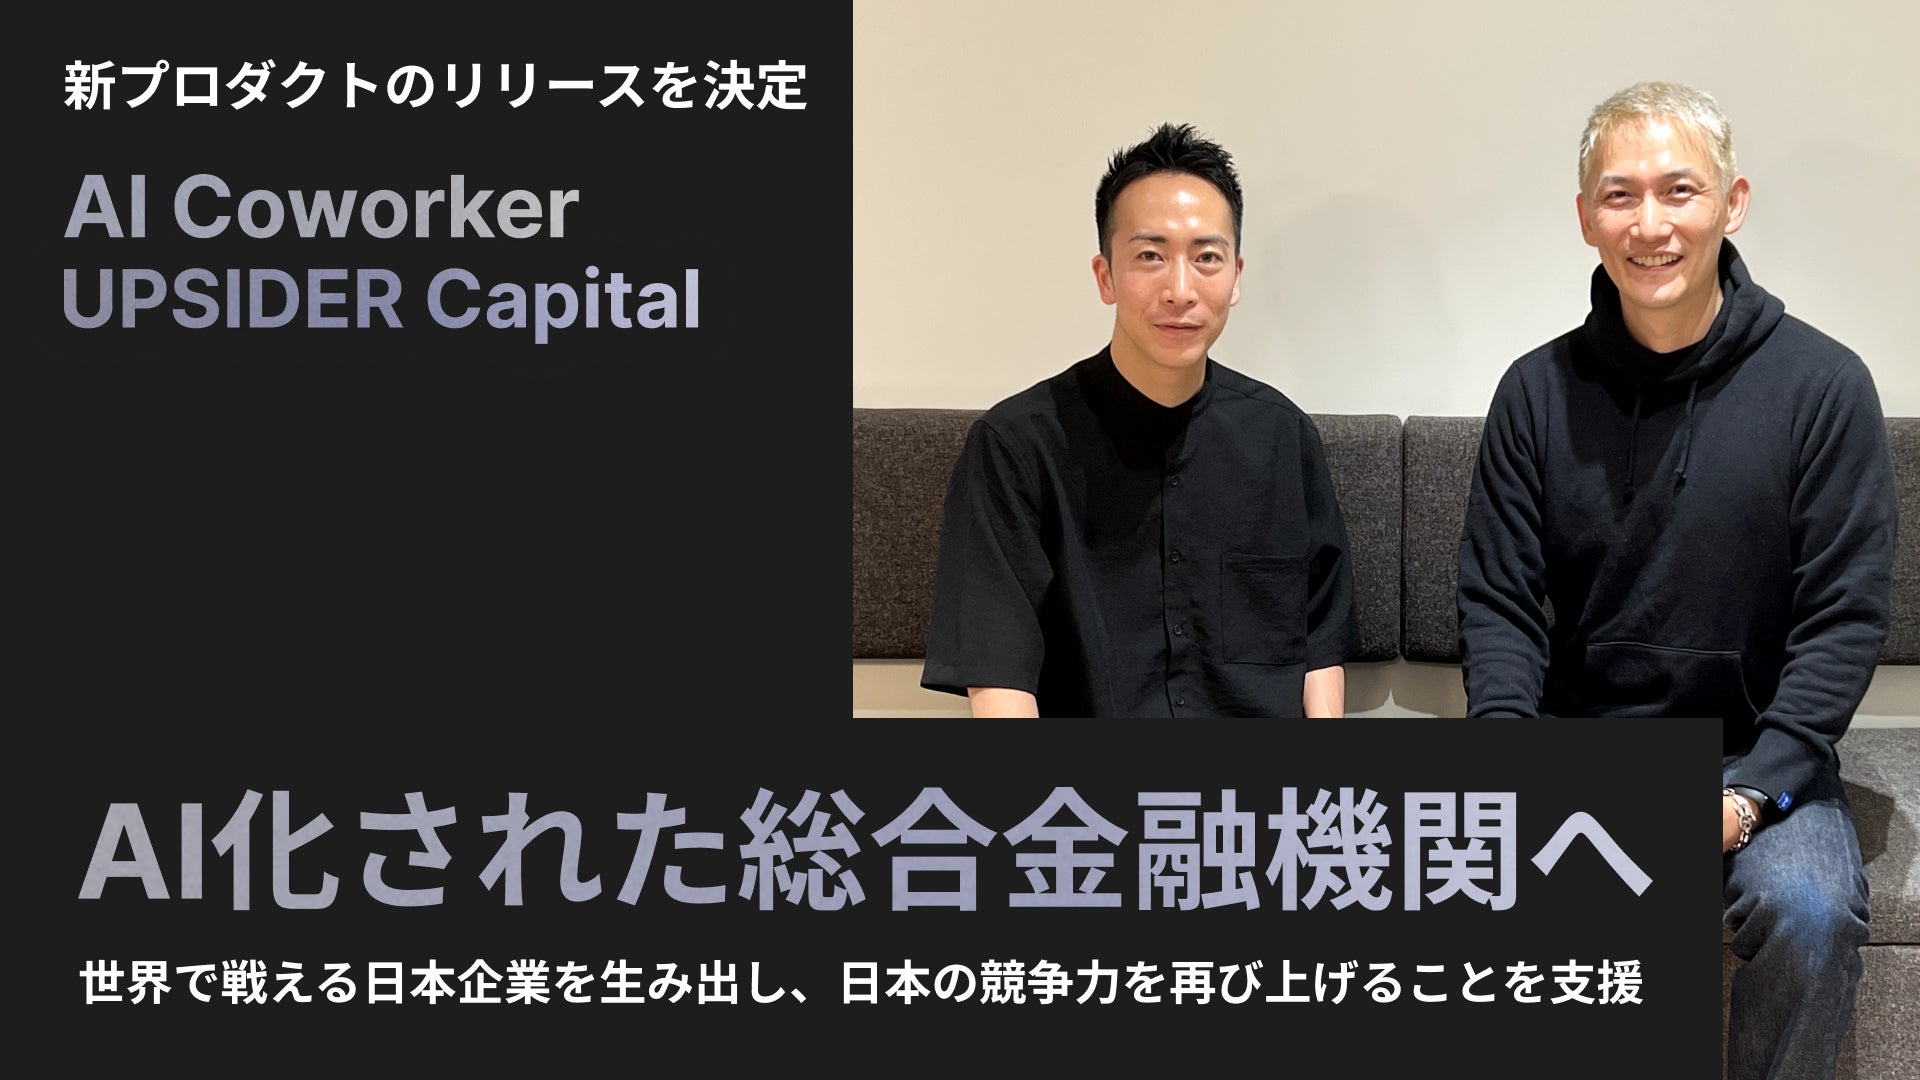 UPSIDER、新プロダクト「AI Coworker」「UPSIDER Capital」のリリースを決定 – 業務効率化ツールおよび成長企業への融資領域に参入